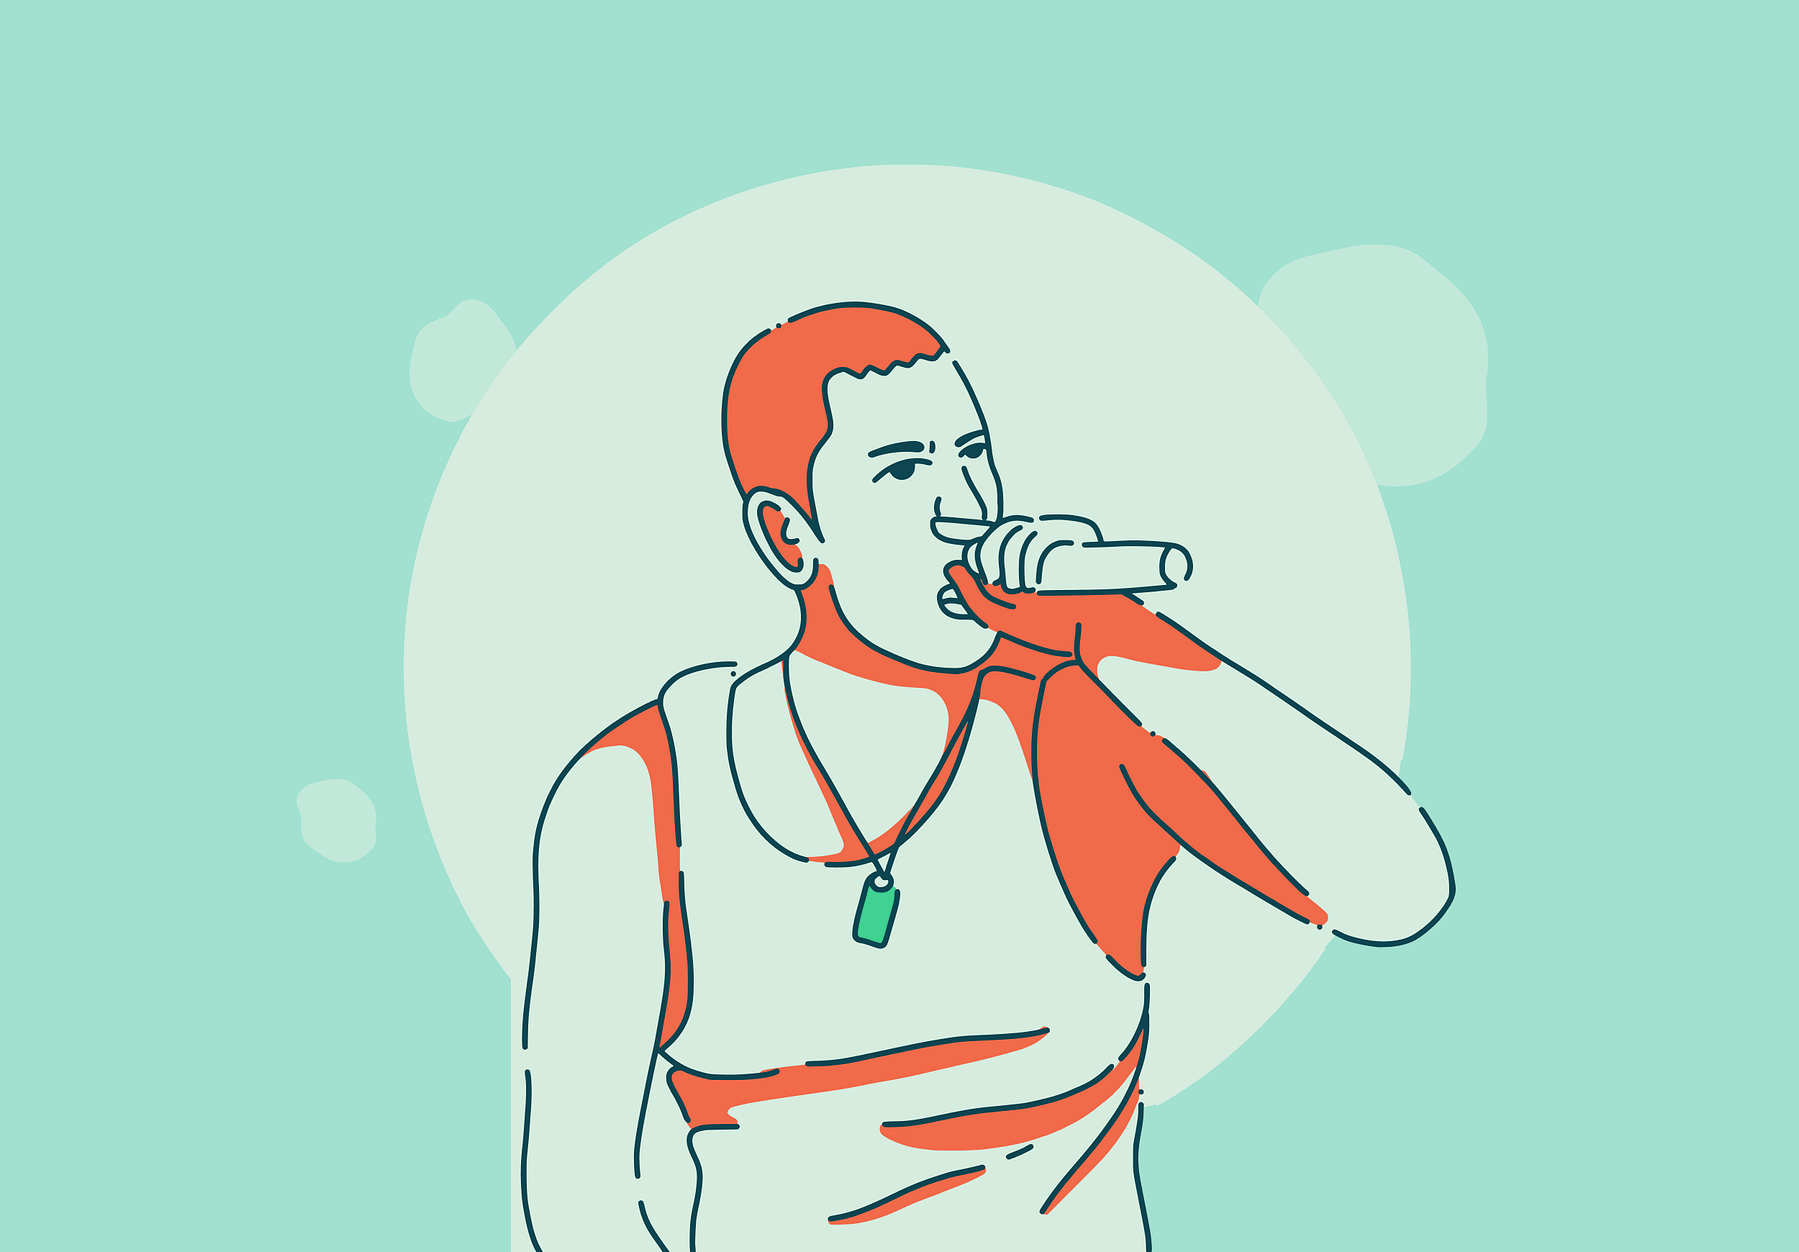 Eminem illustration.